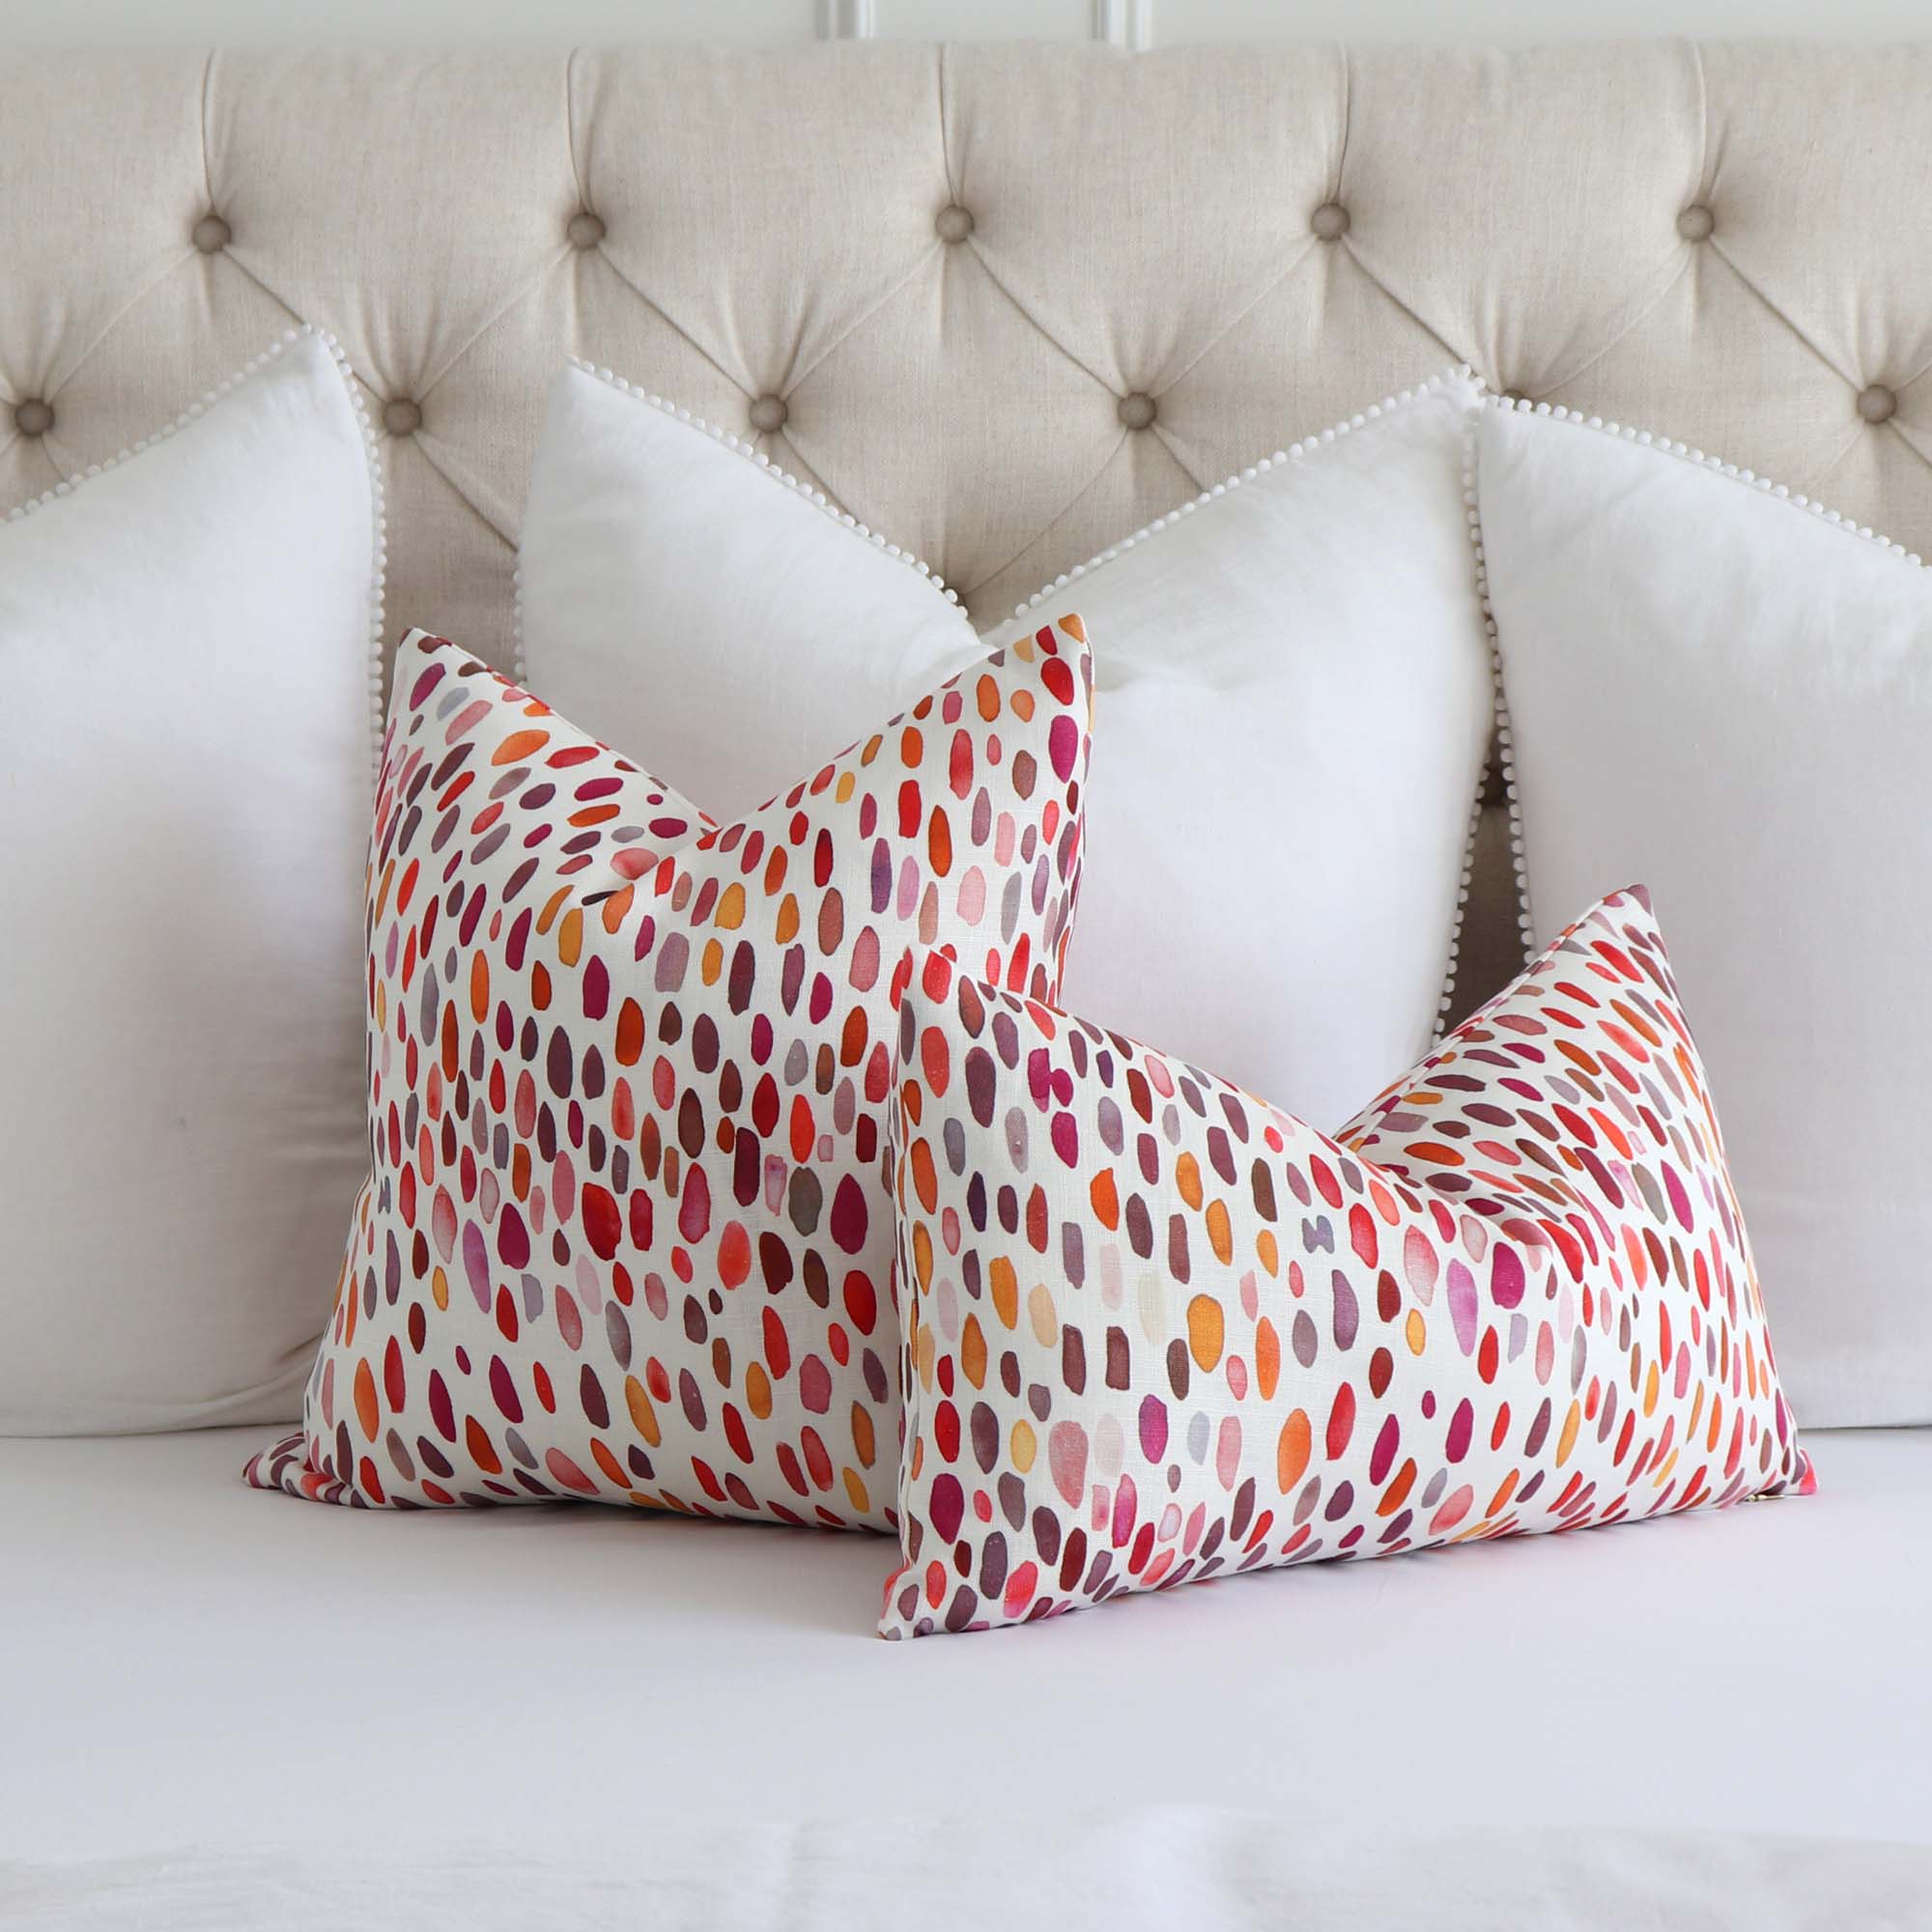 Scalamandre Jamboree Linen Brush Strokes Polka Dots Wild Berry Designer Luxury Throw Pillow Cover with White Linen Euro Shams on Bed